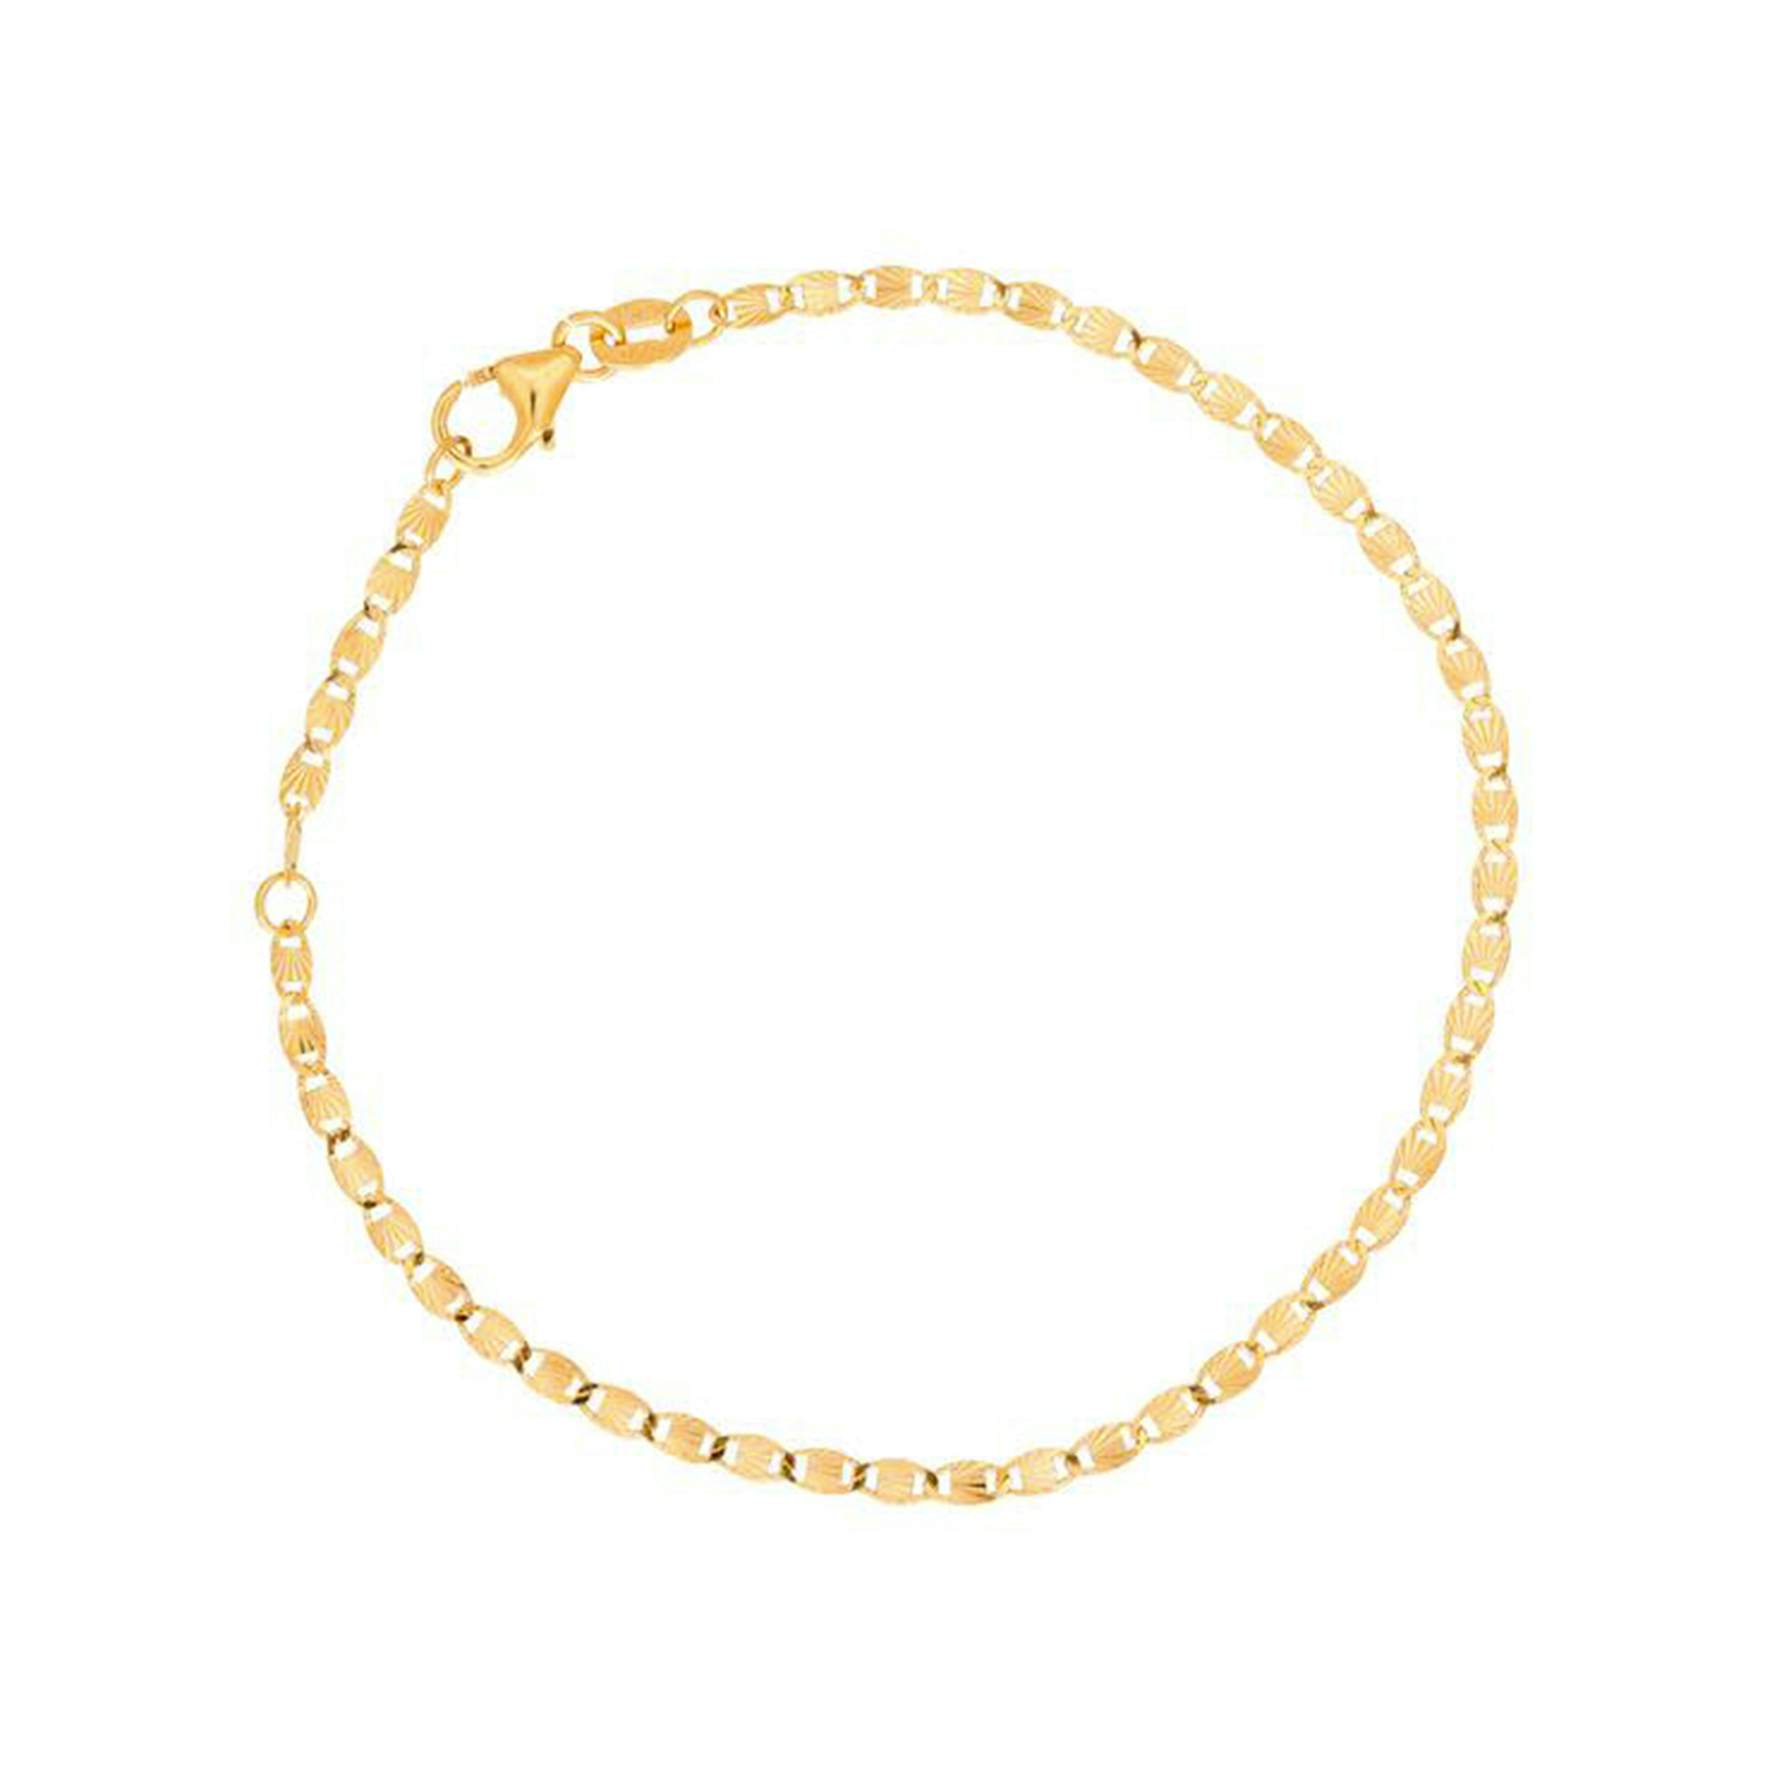 Gilly Bracelet von Pico in Vergoldet-Silber Sterling 925